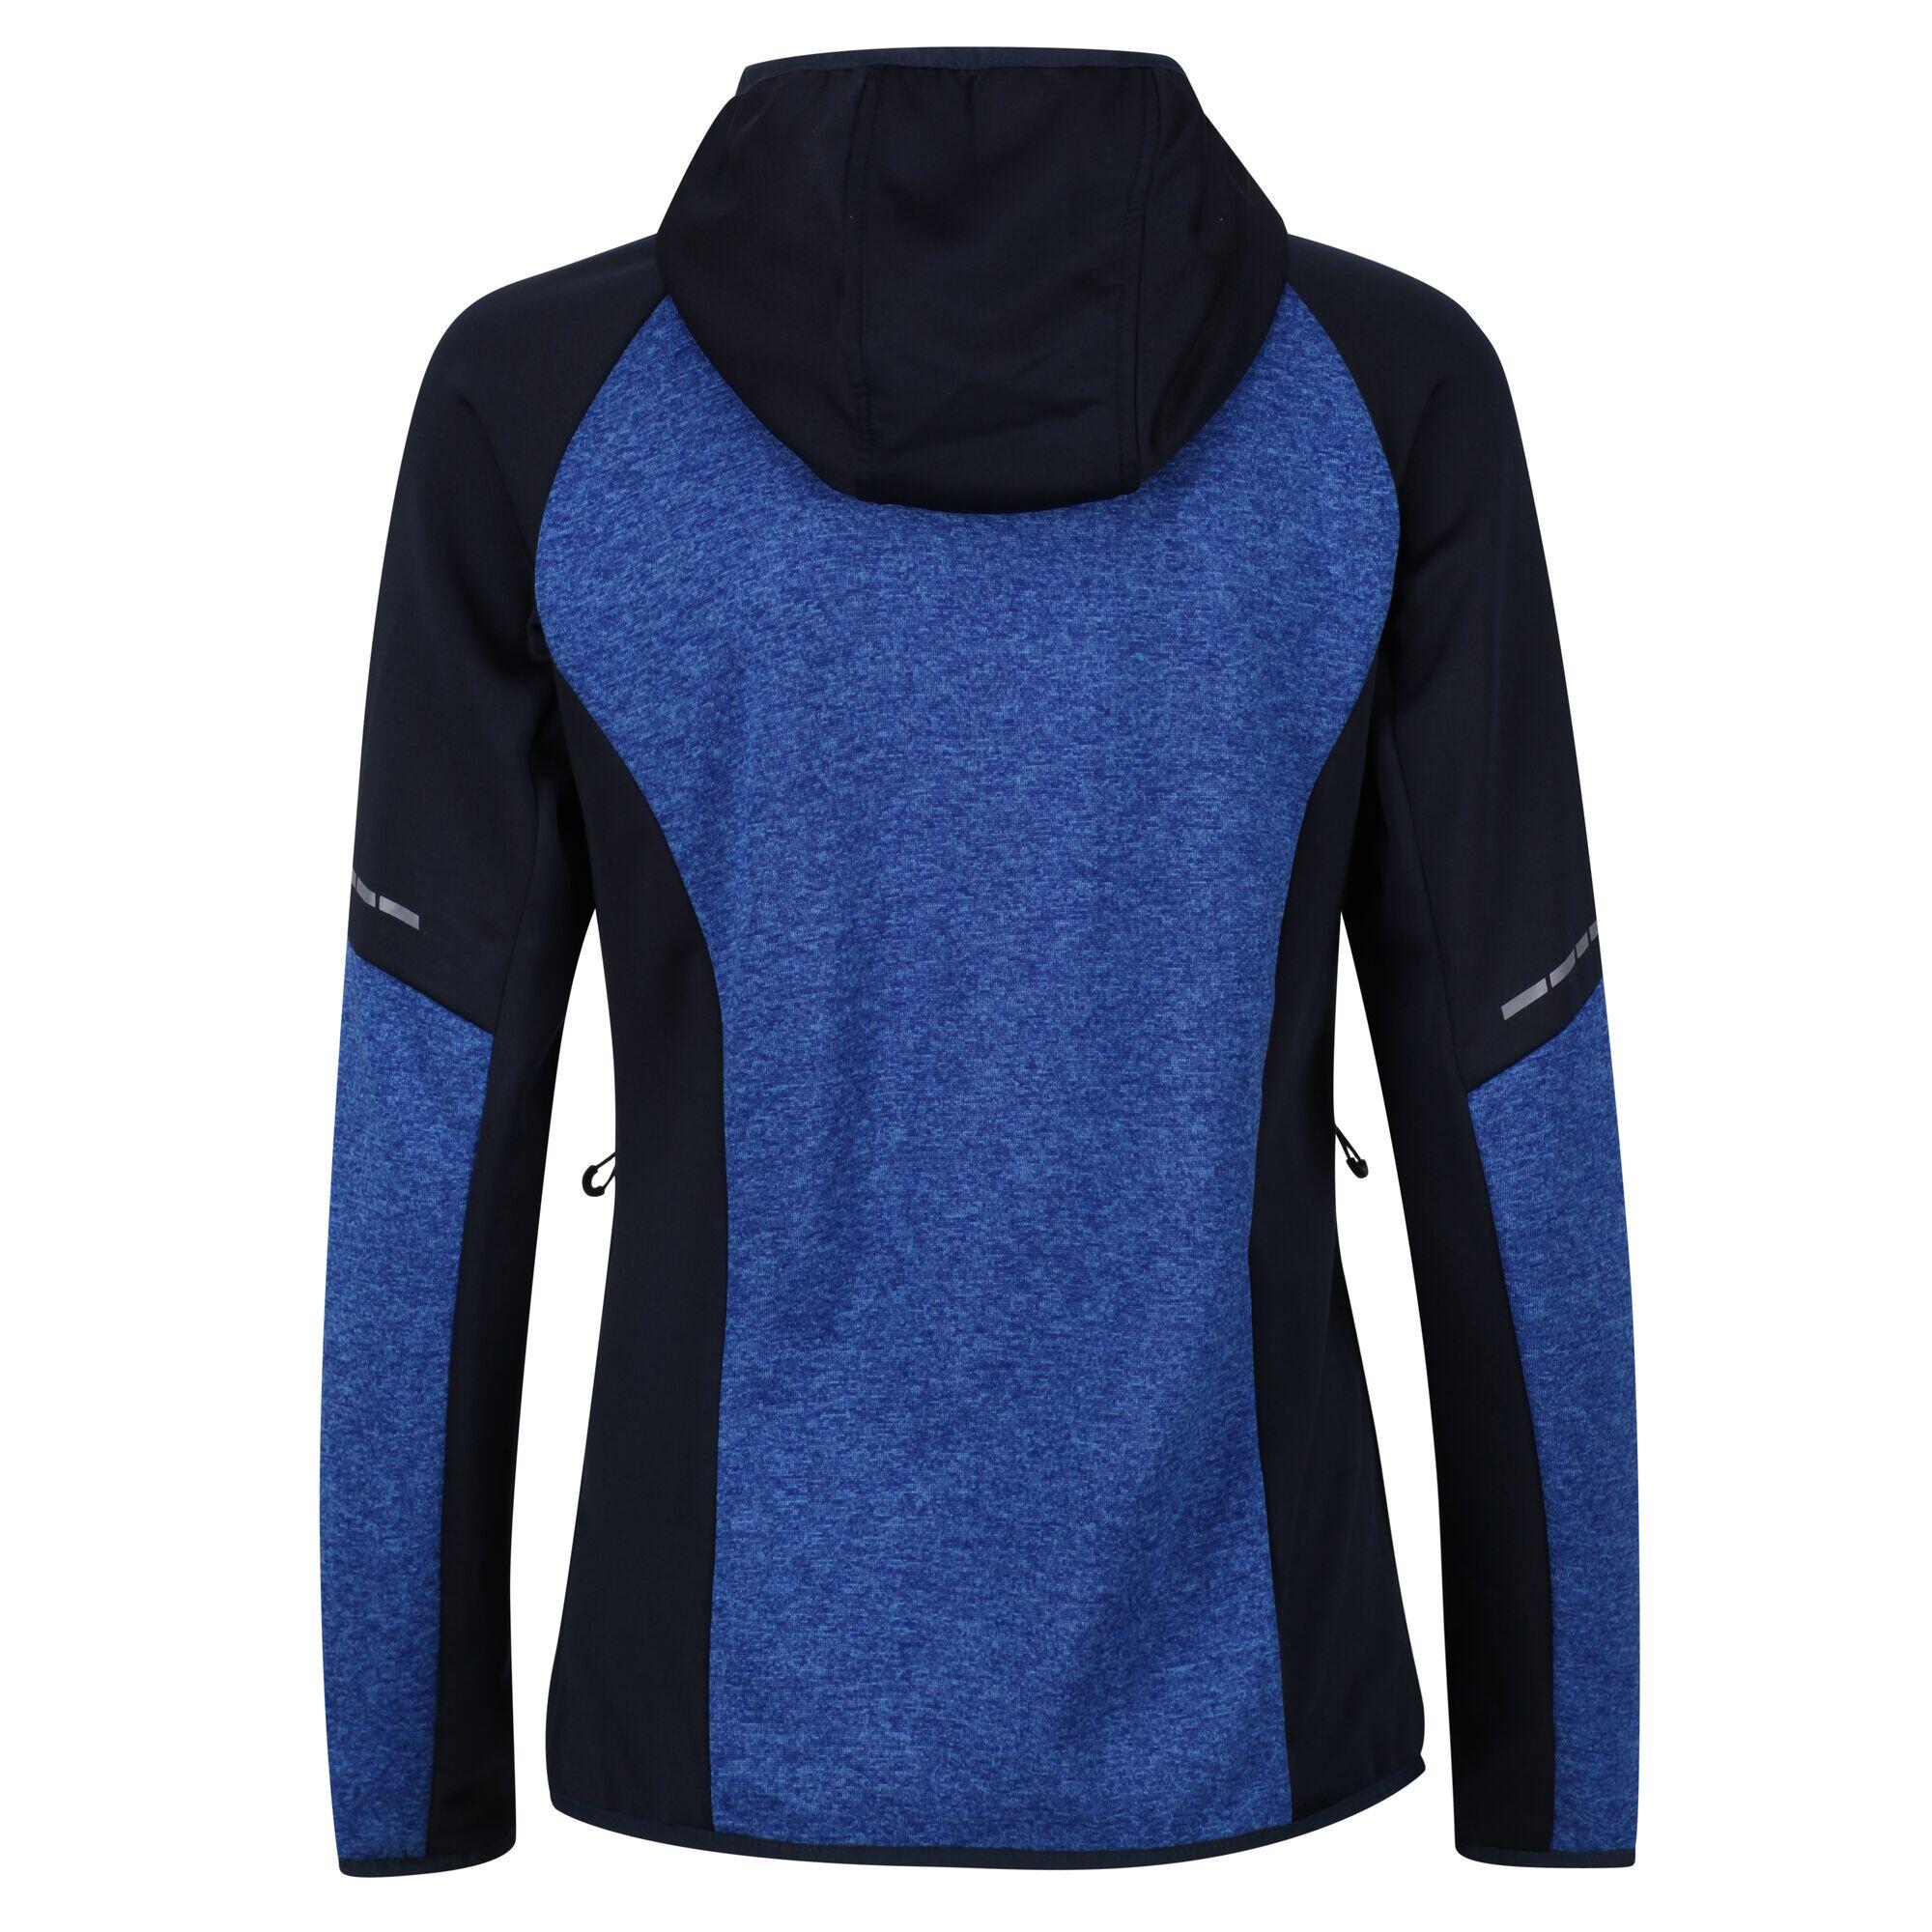 Womens/Ladies Professional Coldspring Fleece Jacket (Oxford Blue Marl/Navy) 2/5